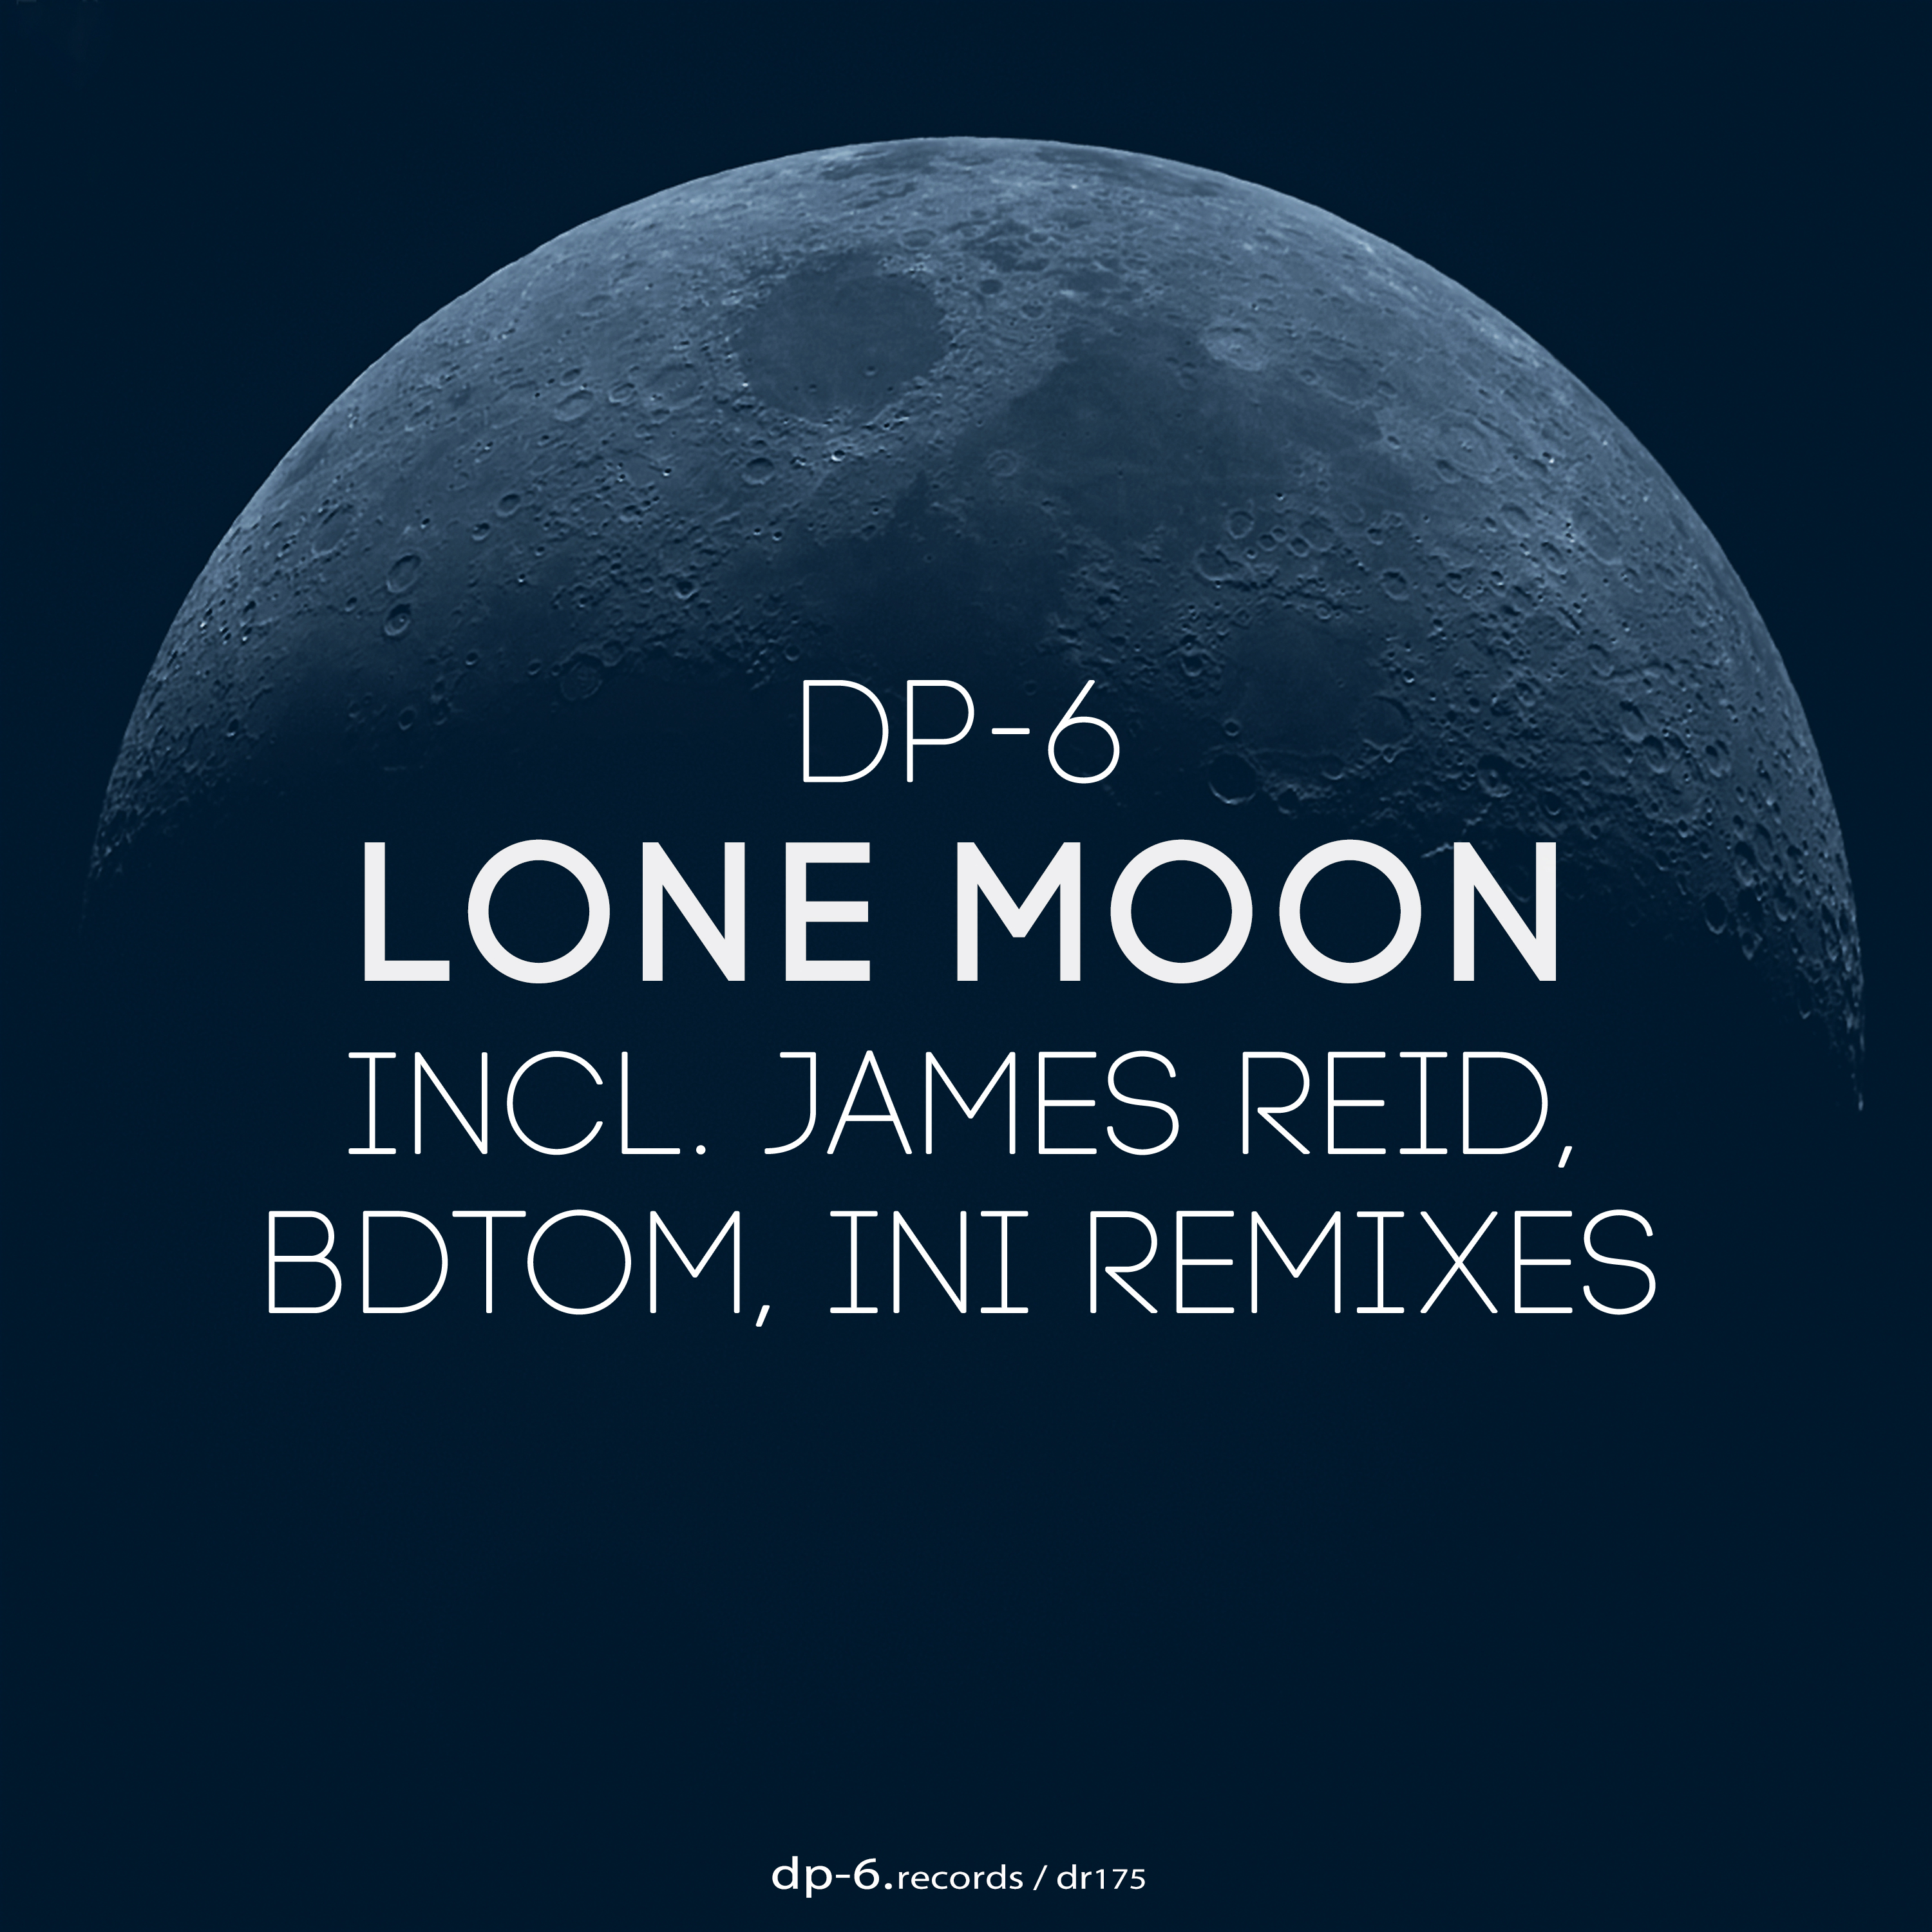 DP-6: Lone Moon